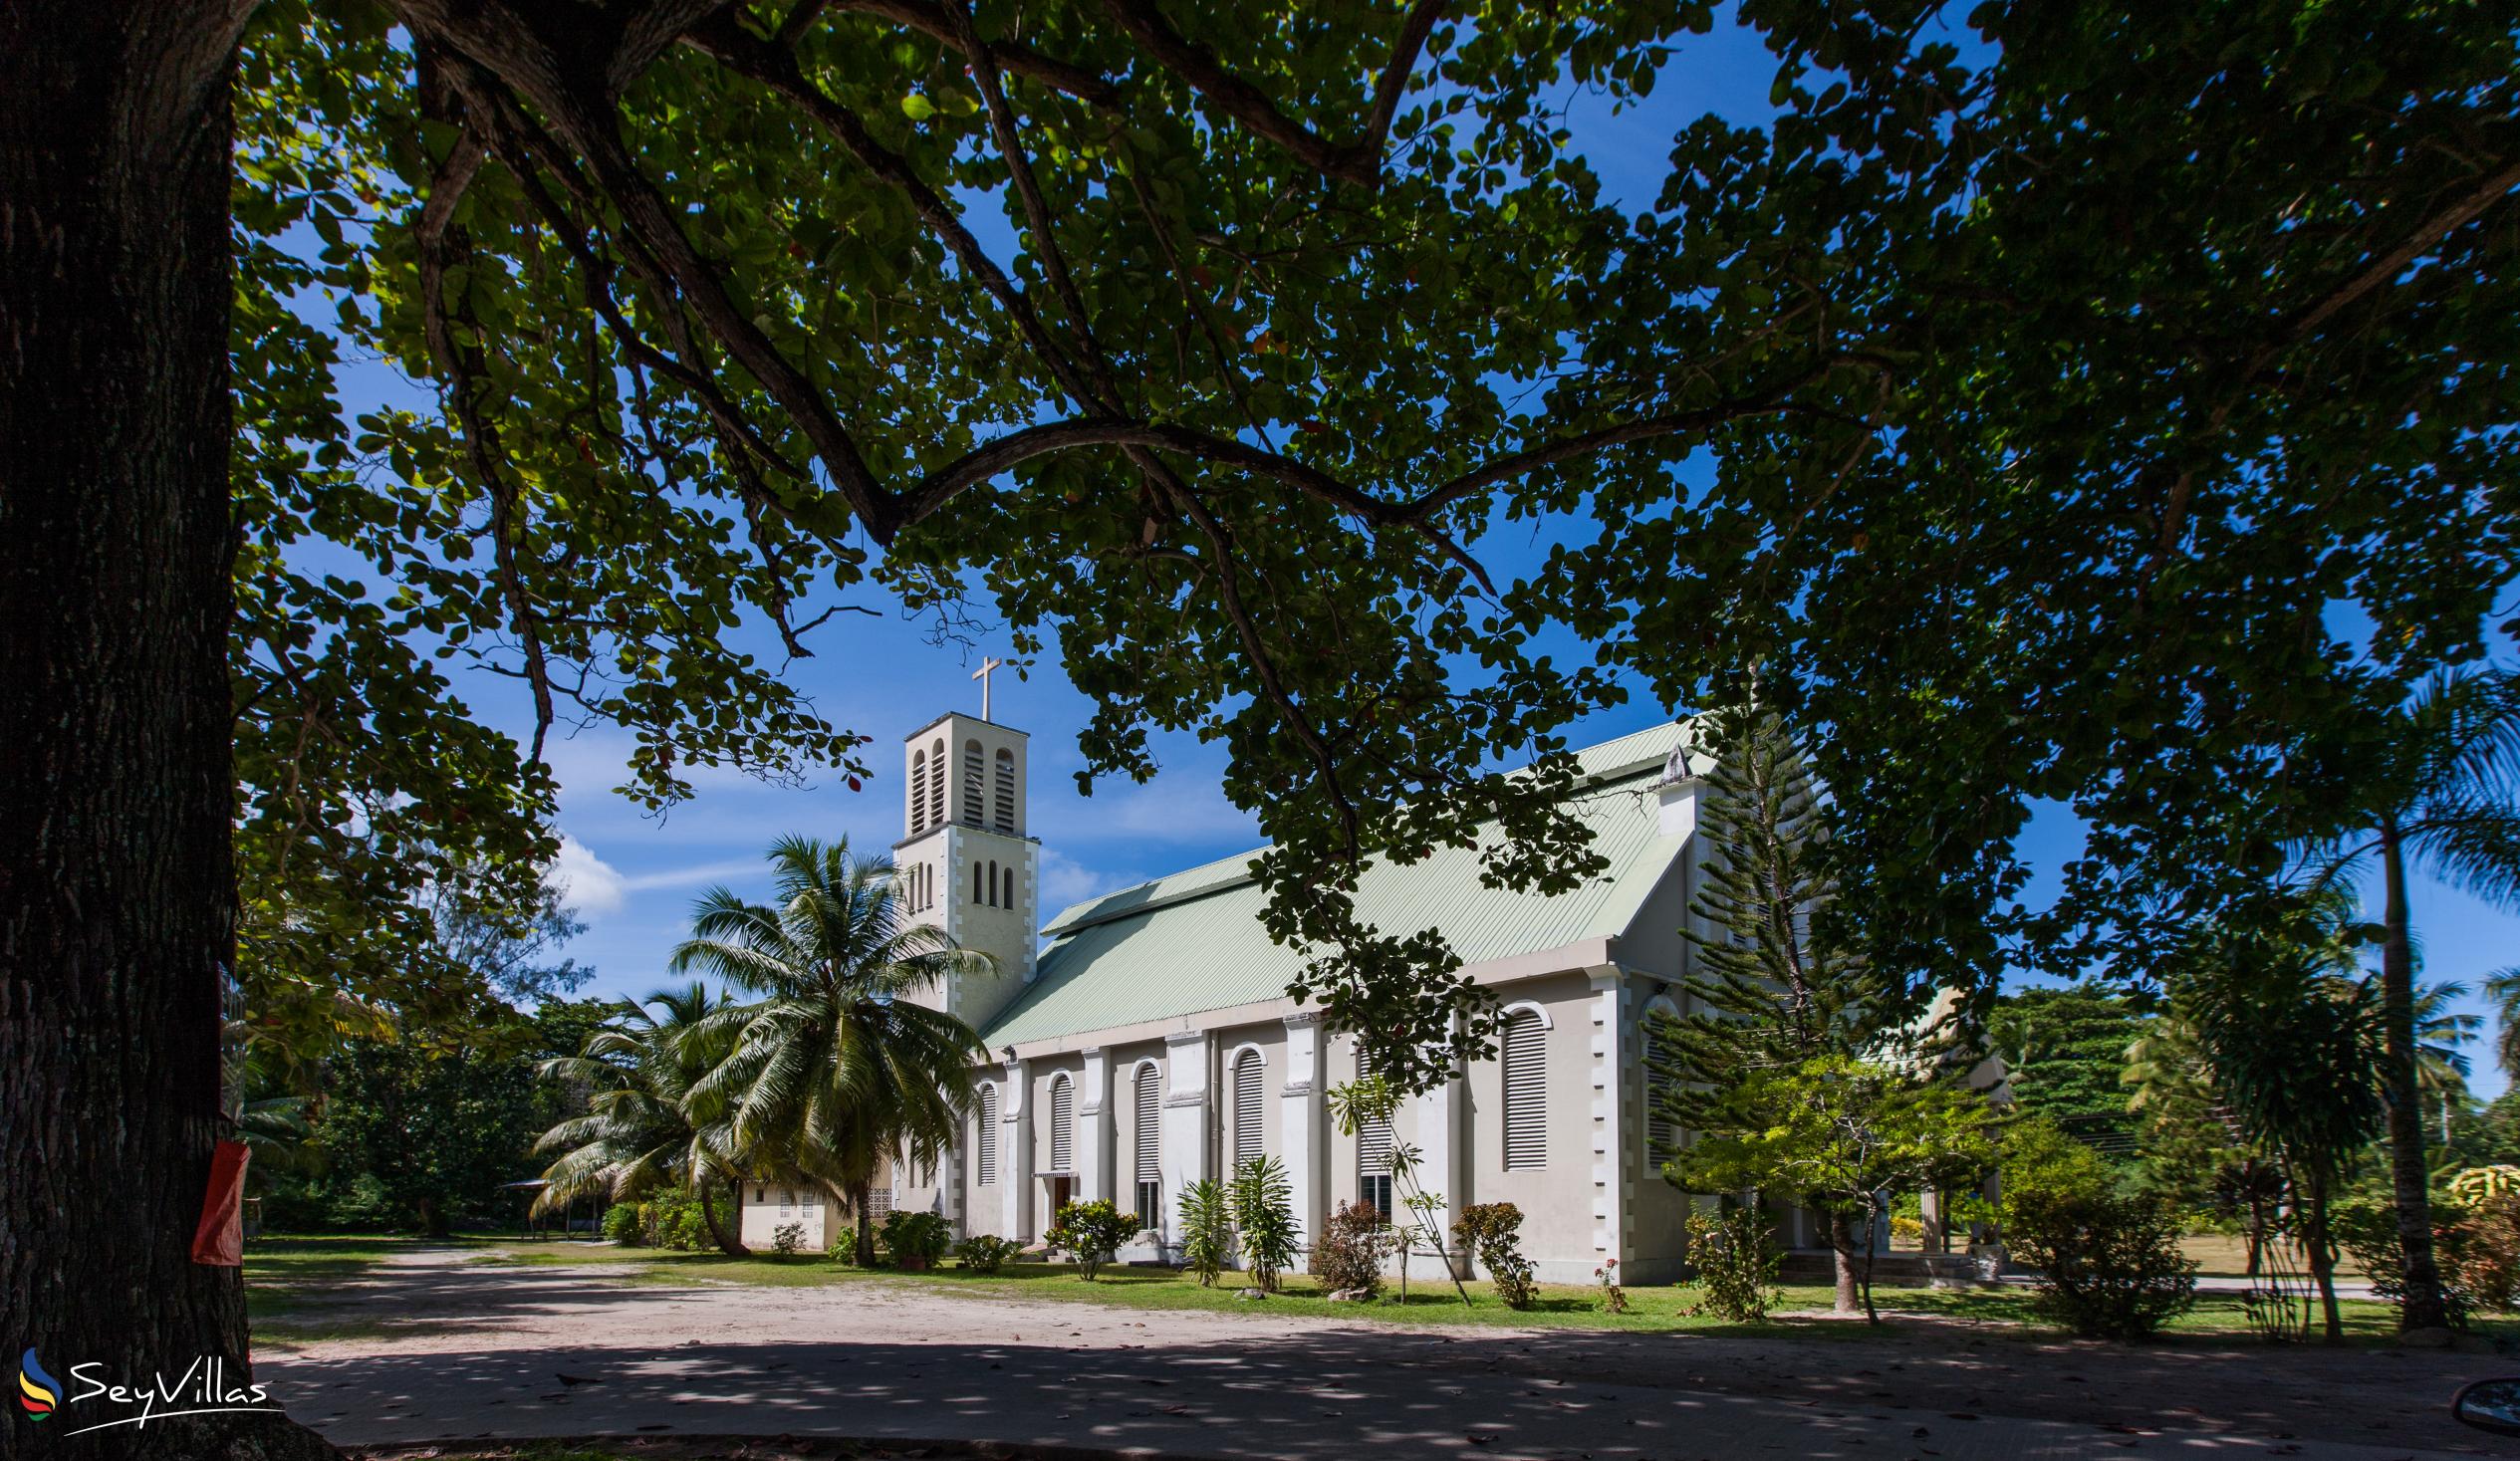 Foto 36: Villa Laure - Lage - Praslin (Seychellen)